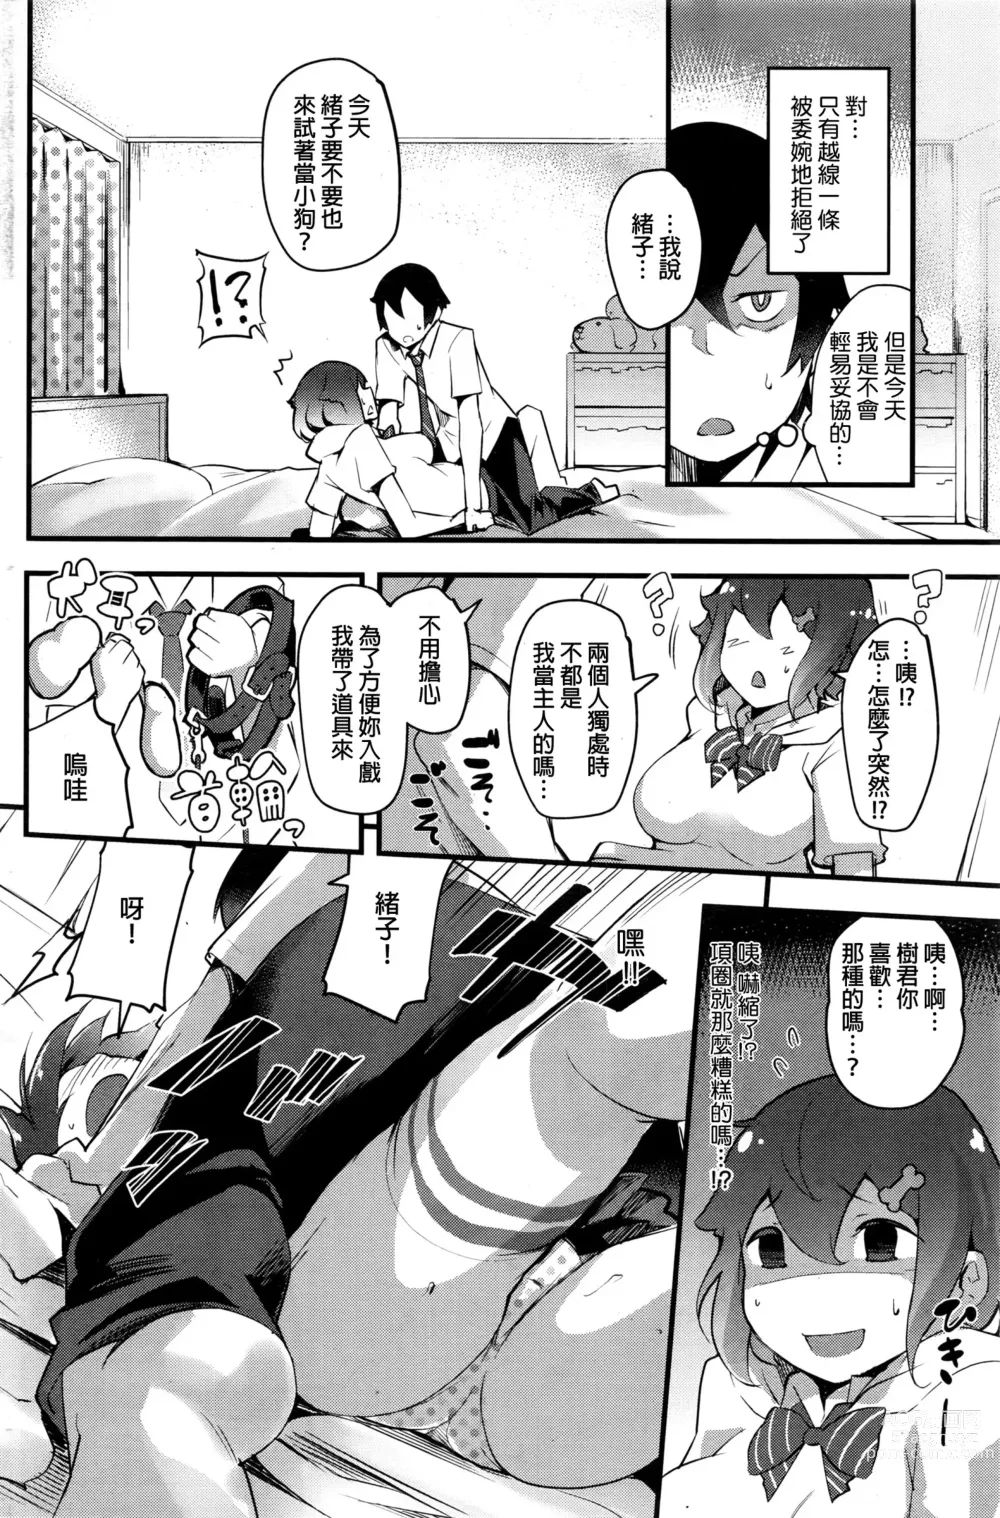 Page 4 of manga Toy Dog Pretenders